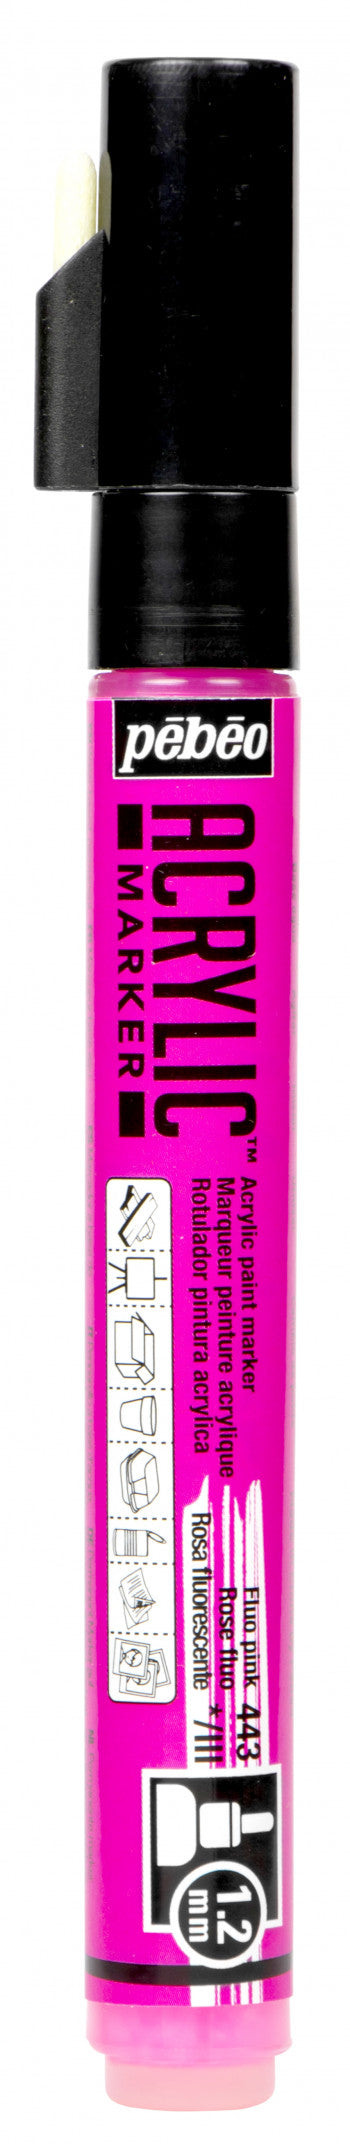 Acrylic Marker 1.2mm Pebeo Neon pink - 443